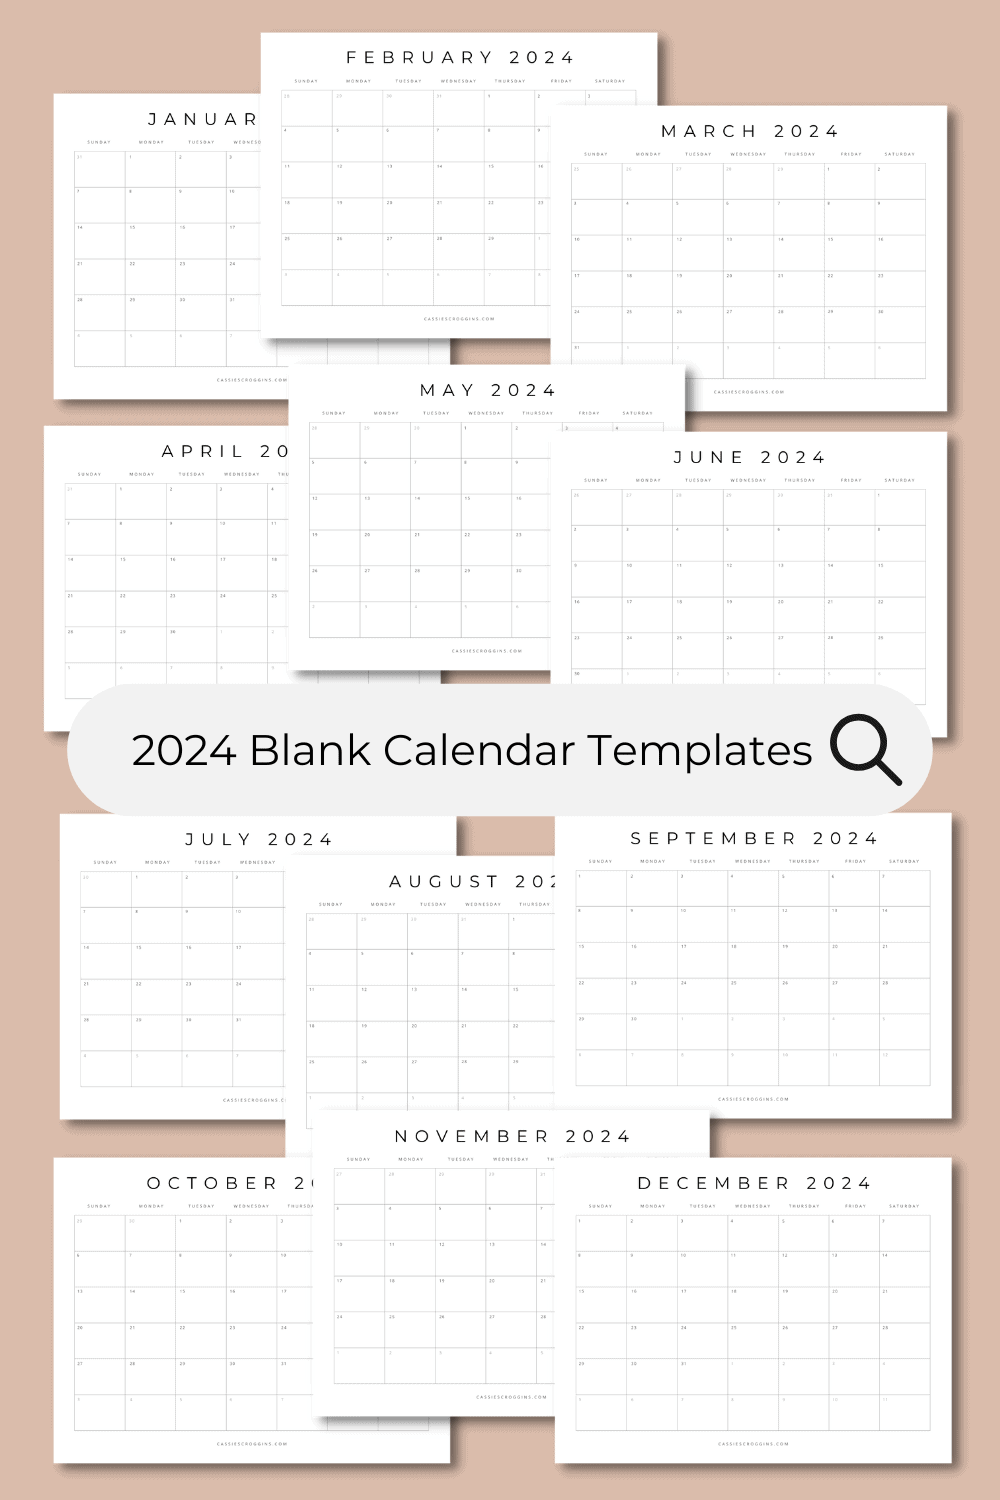 Free Printable 2024 Blank Calendar Templates (All 12 Months) with regard to Free Printable Calendar 2024 With Time Slots